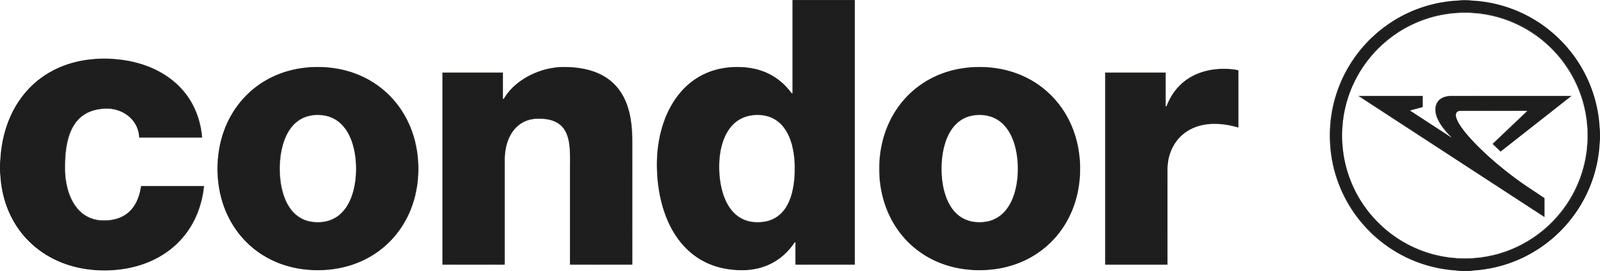 Condor_Logo - edited